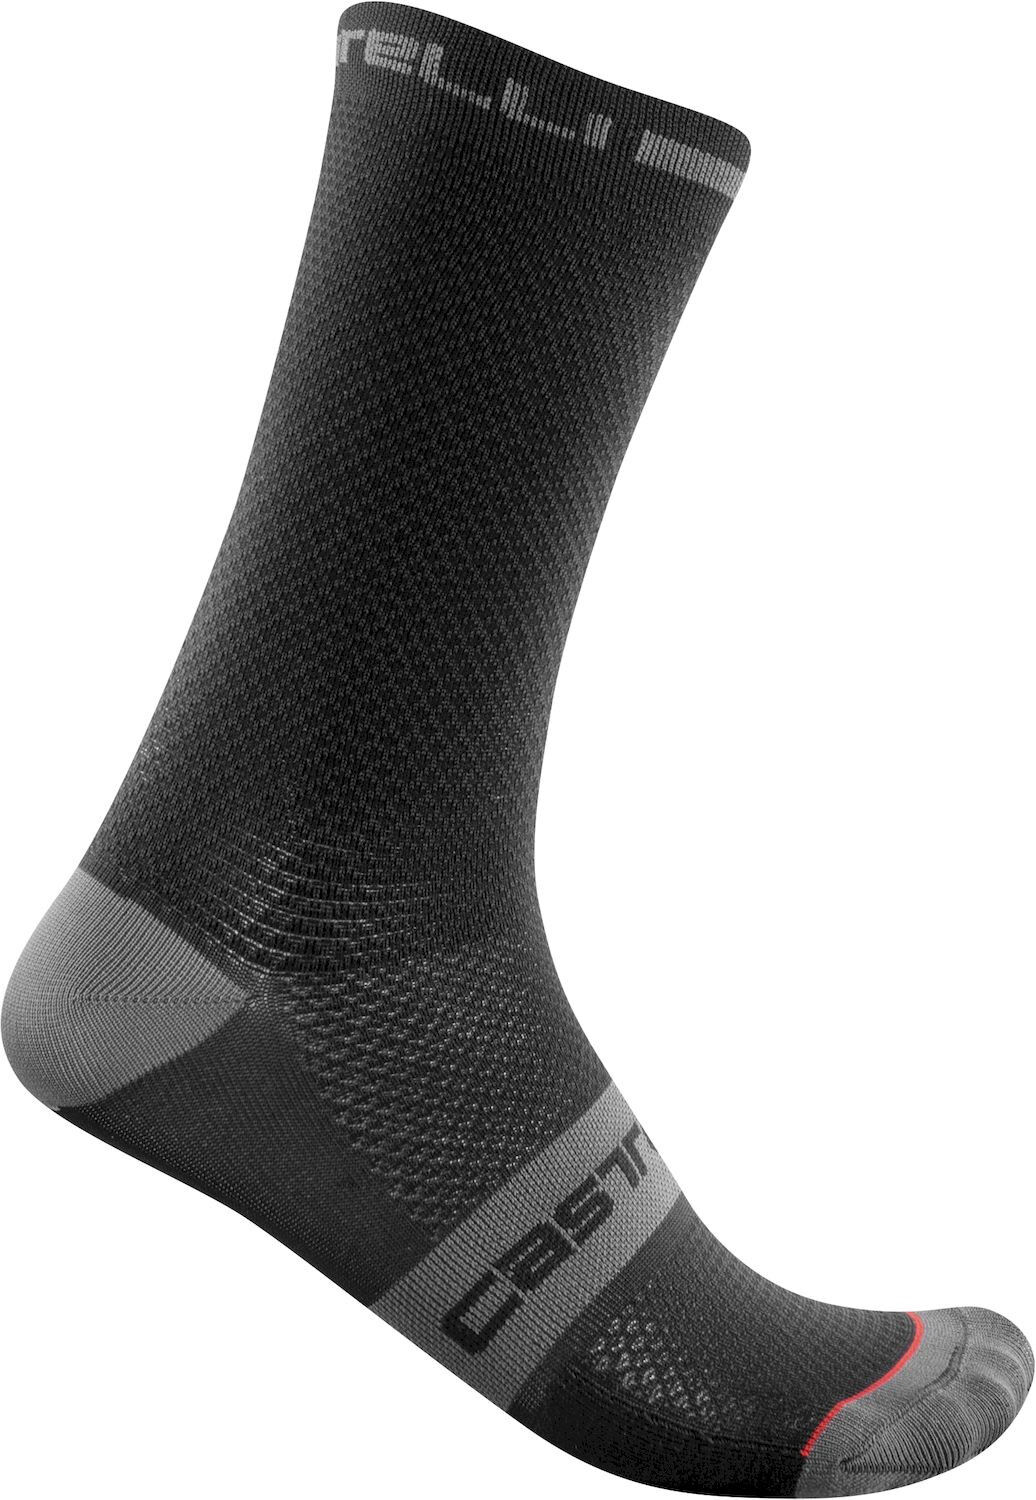 Castelli Superleggera T 18 - Cycling socks